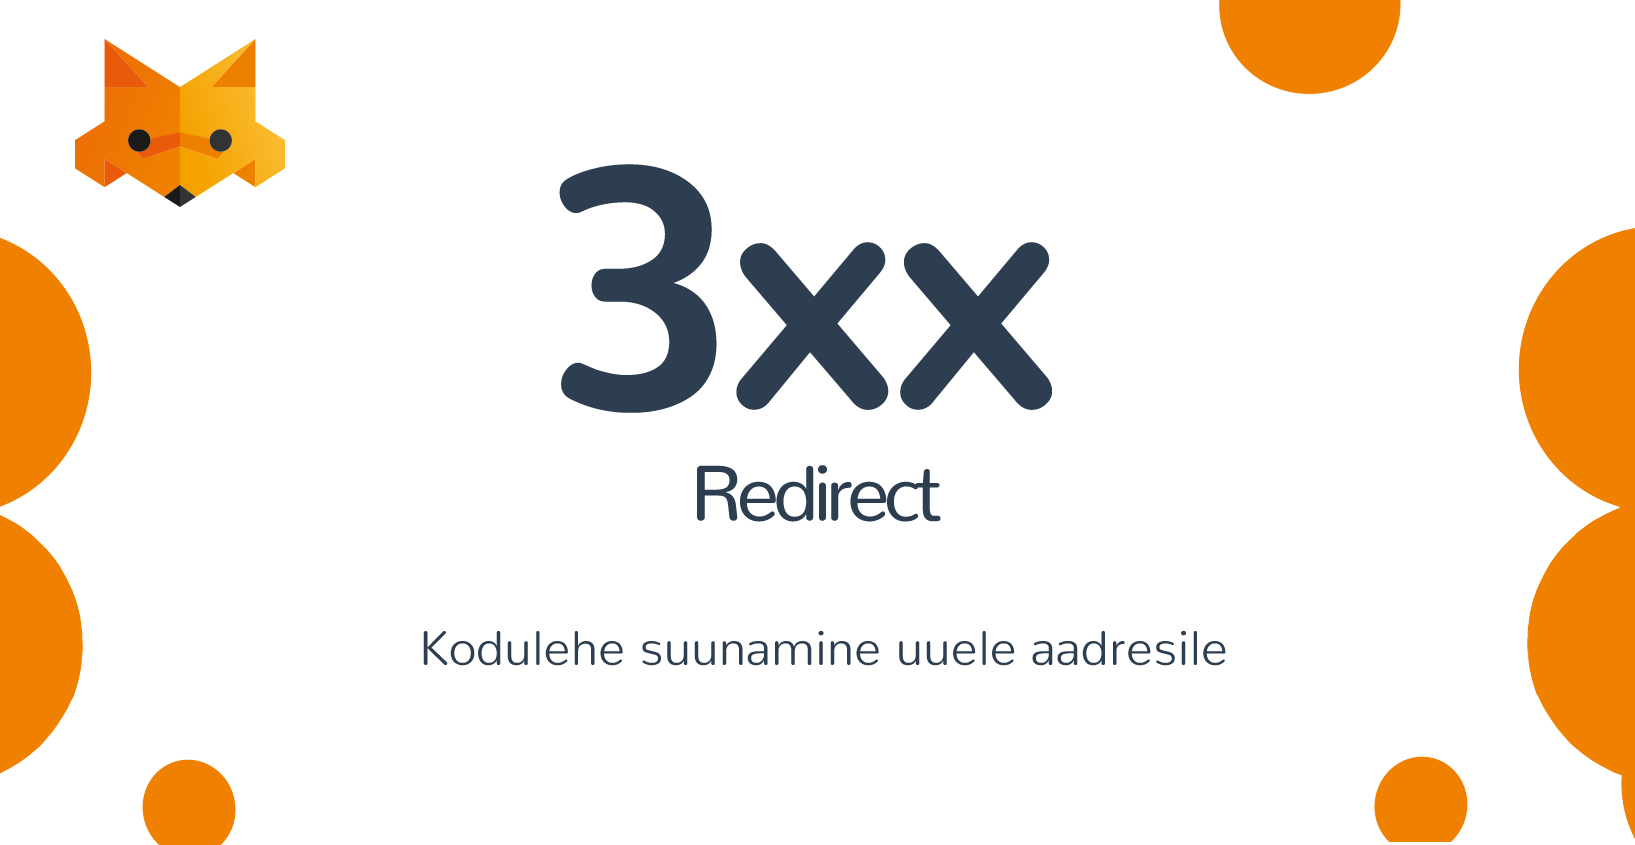 3xx Redirect